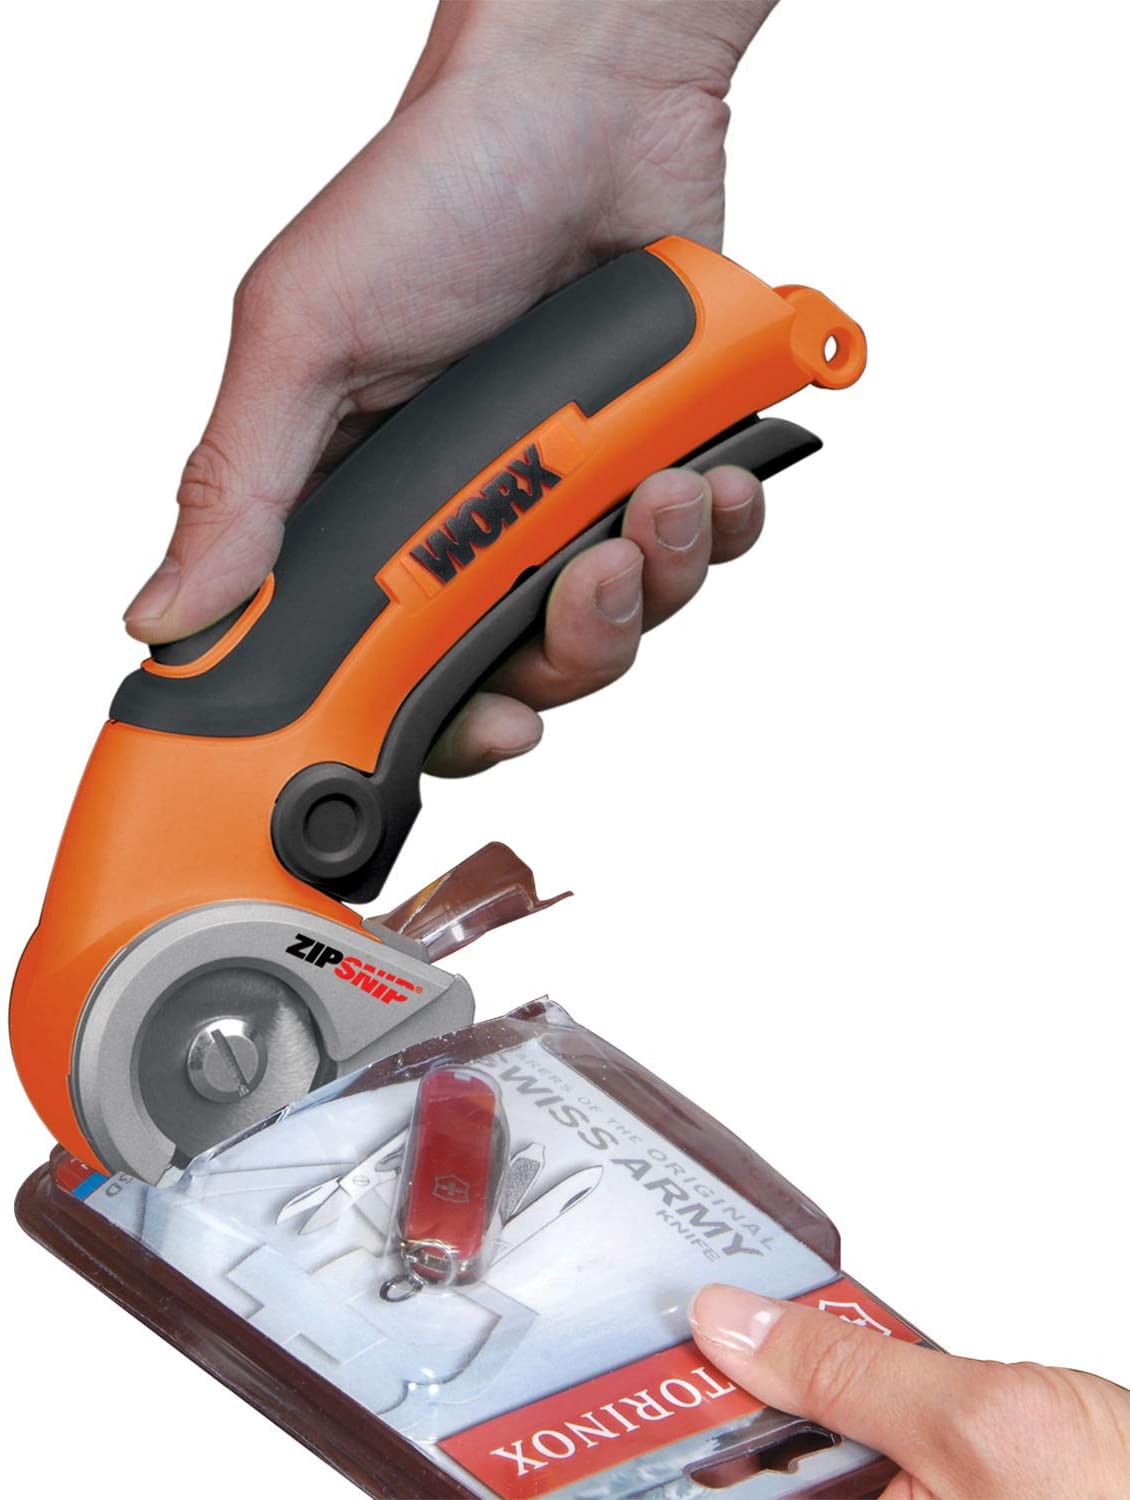 WORX WX081L ZipSnip Cutting Tool